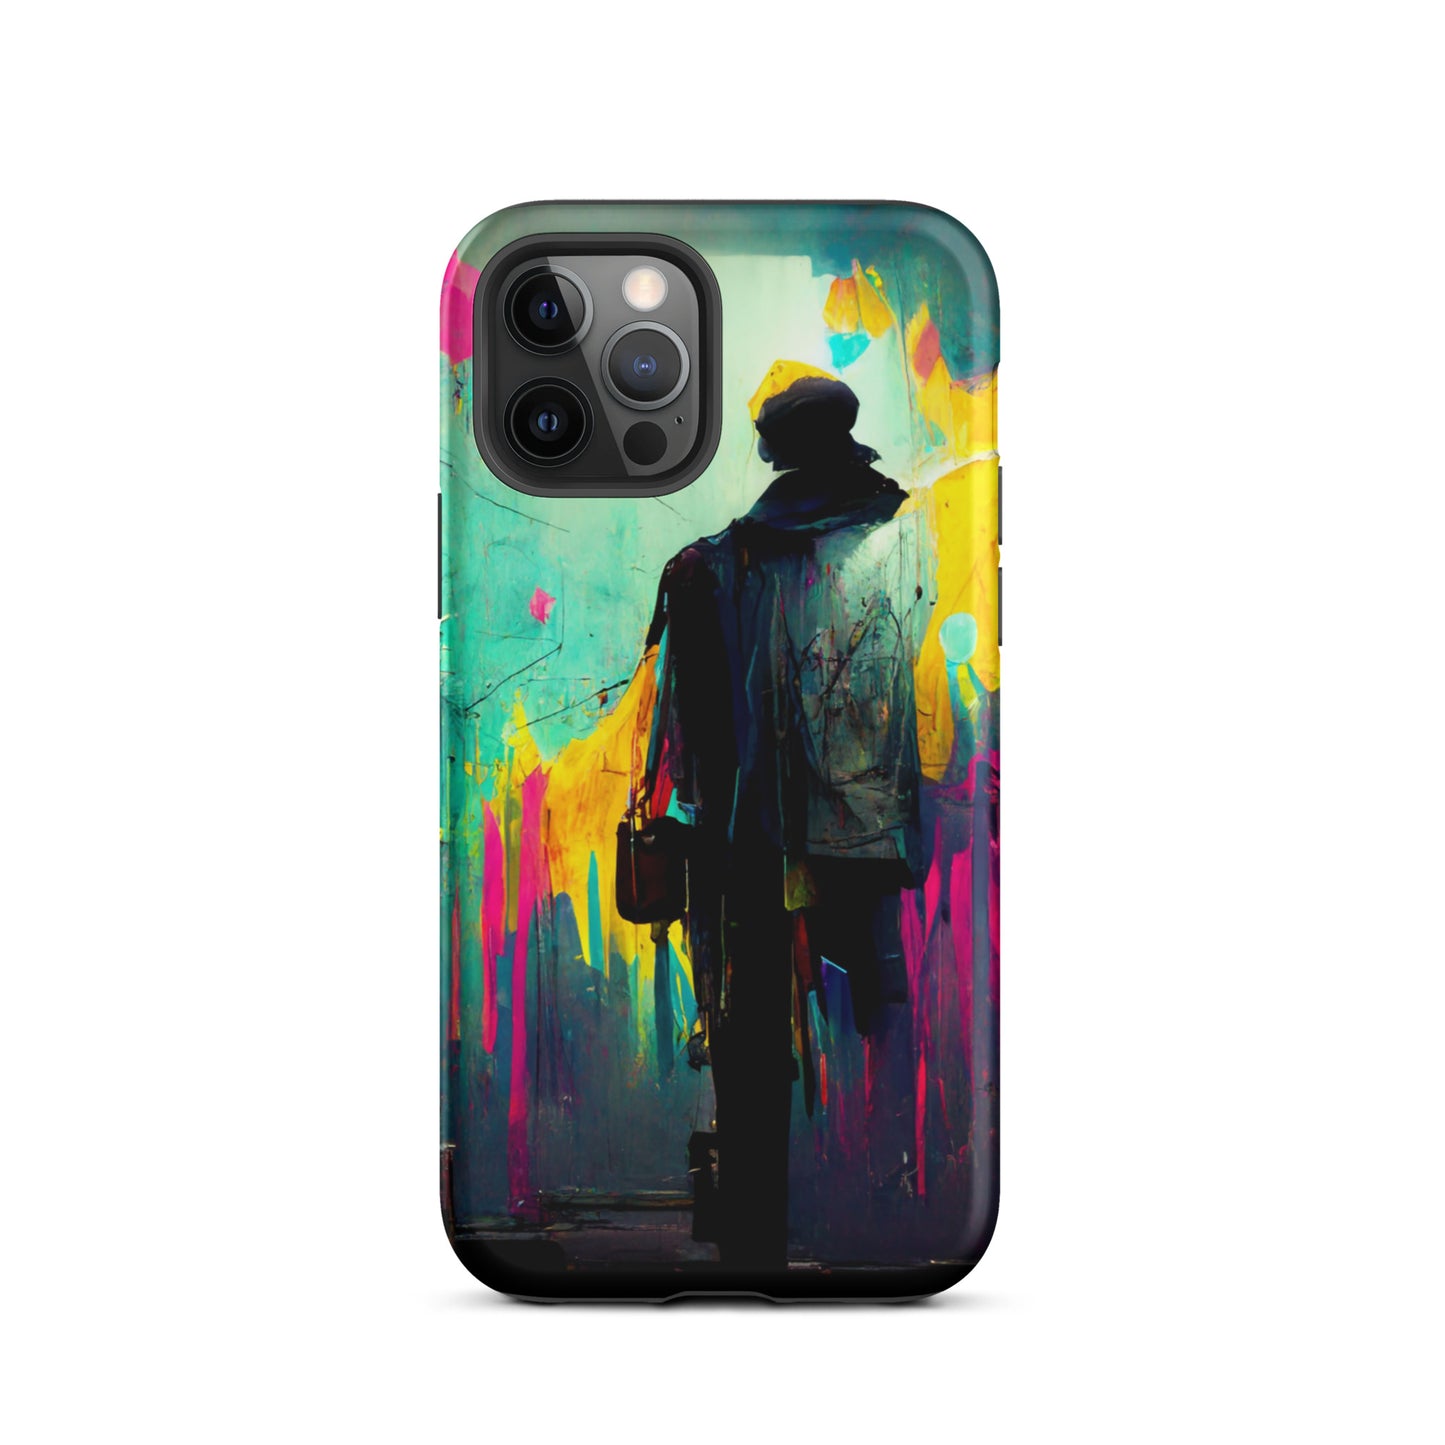 Neduz Designs Artified Graffiti Silhouette Tough Case for iPhone®